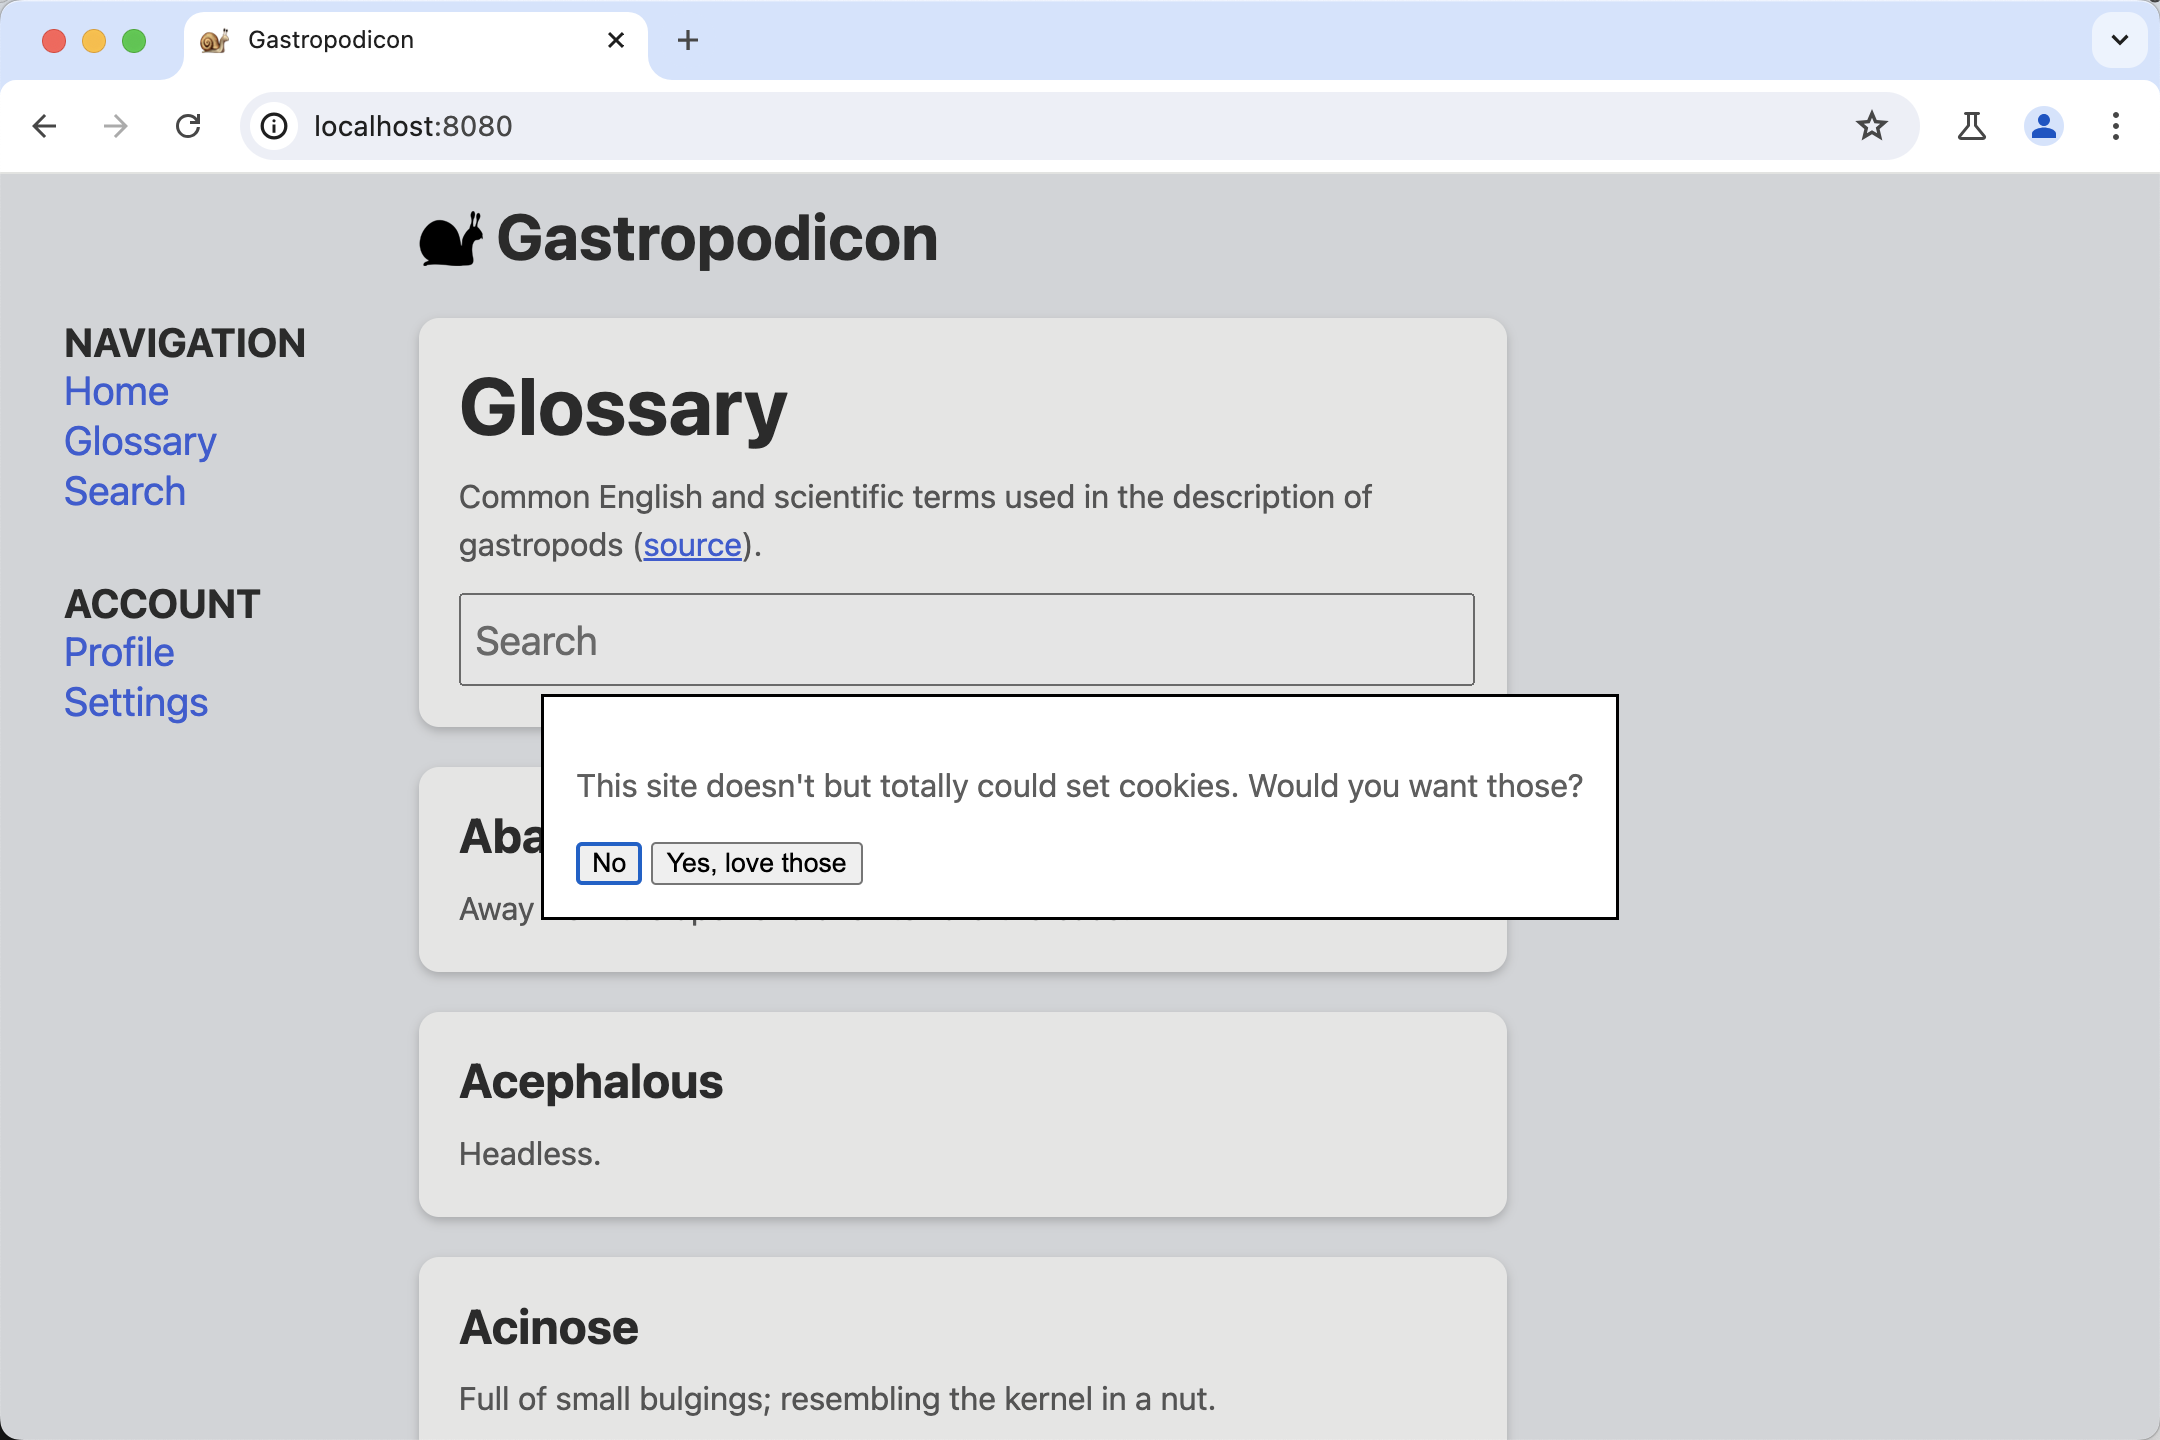 A screenshot of the Gastropodicon demo page